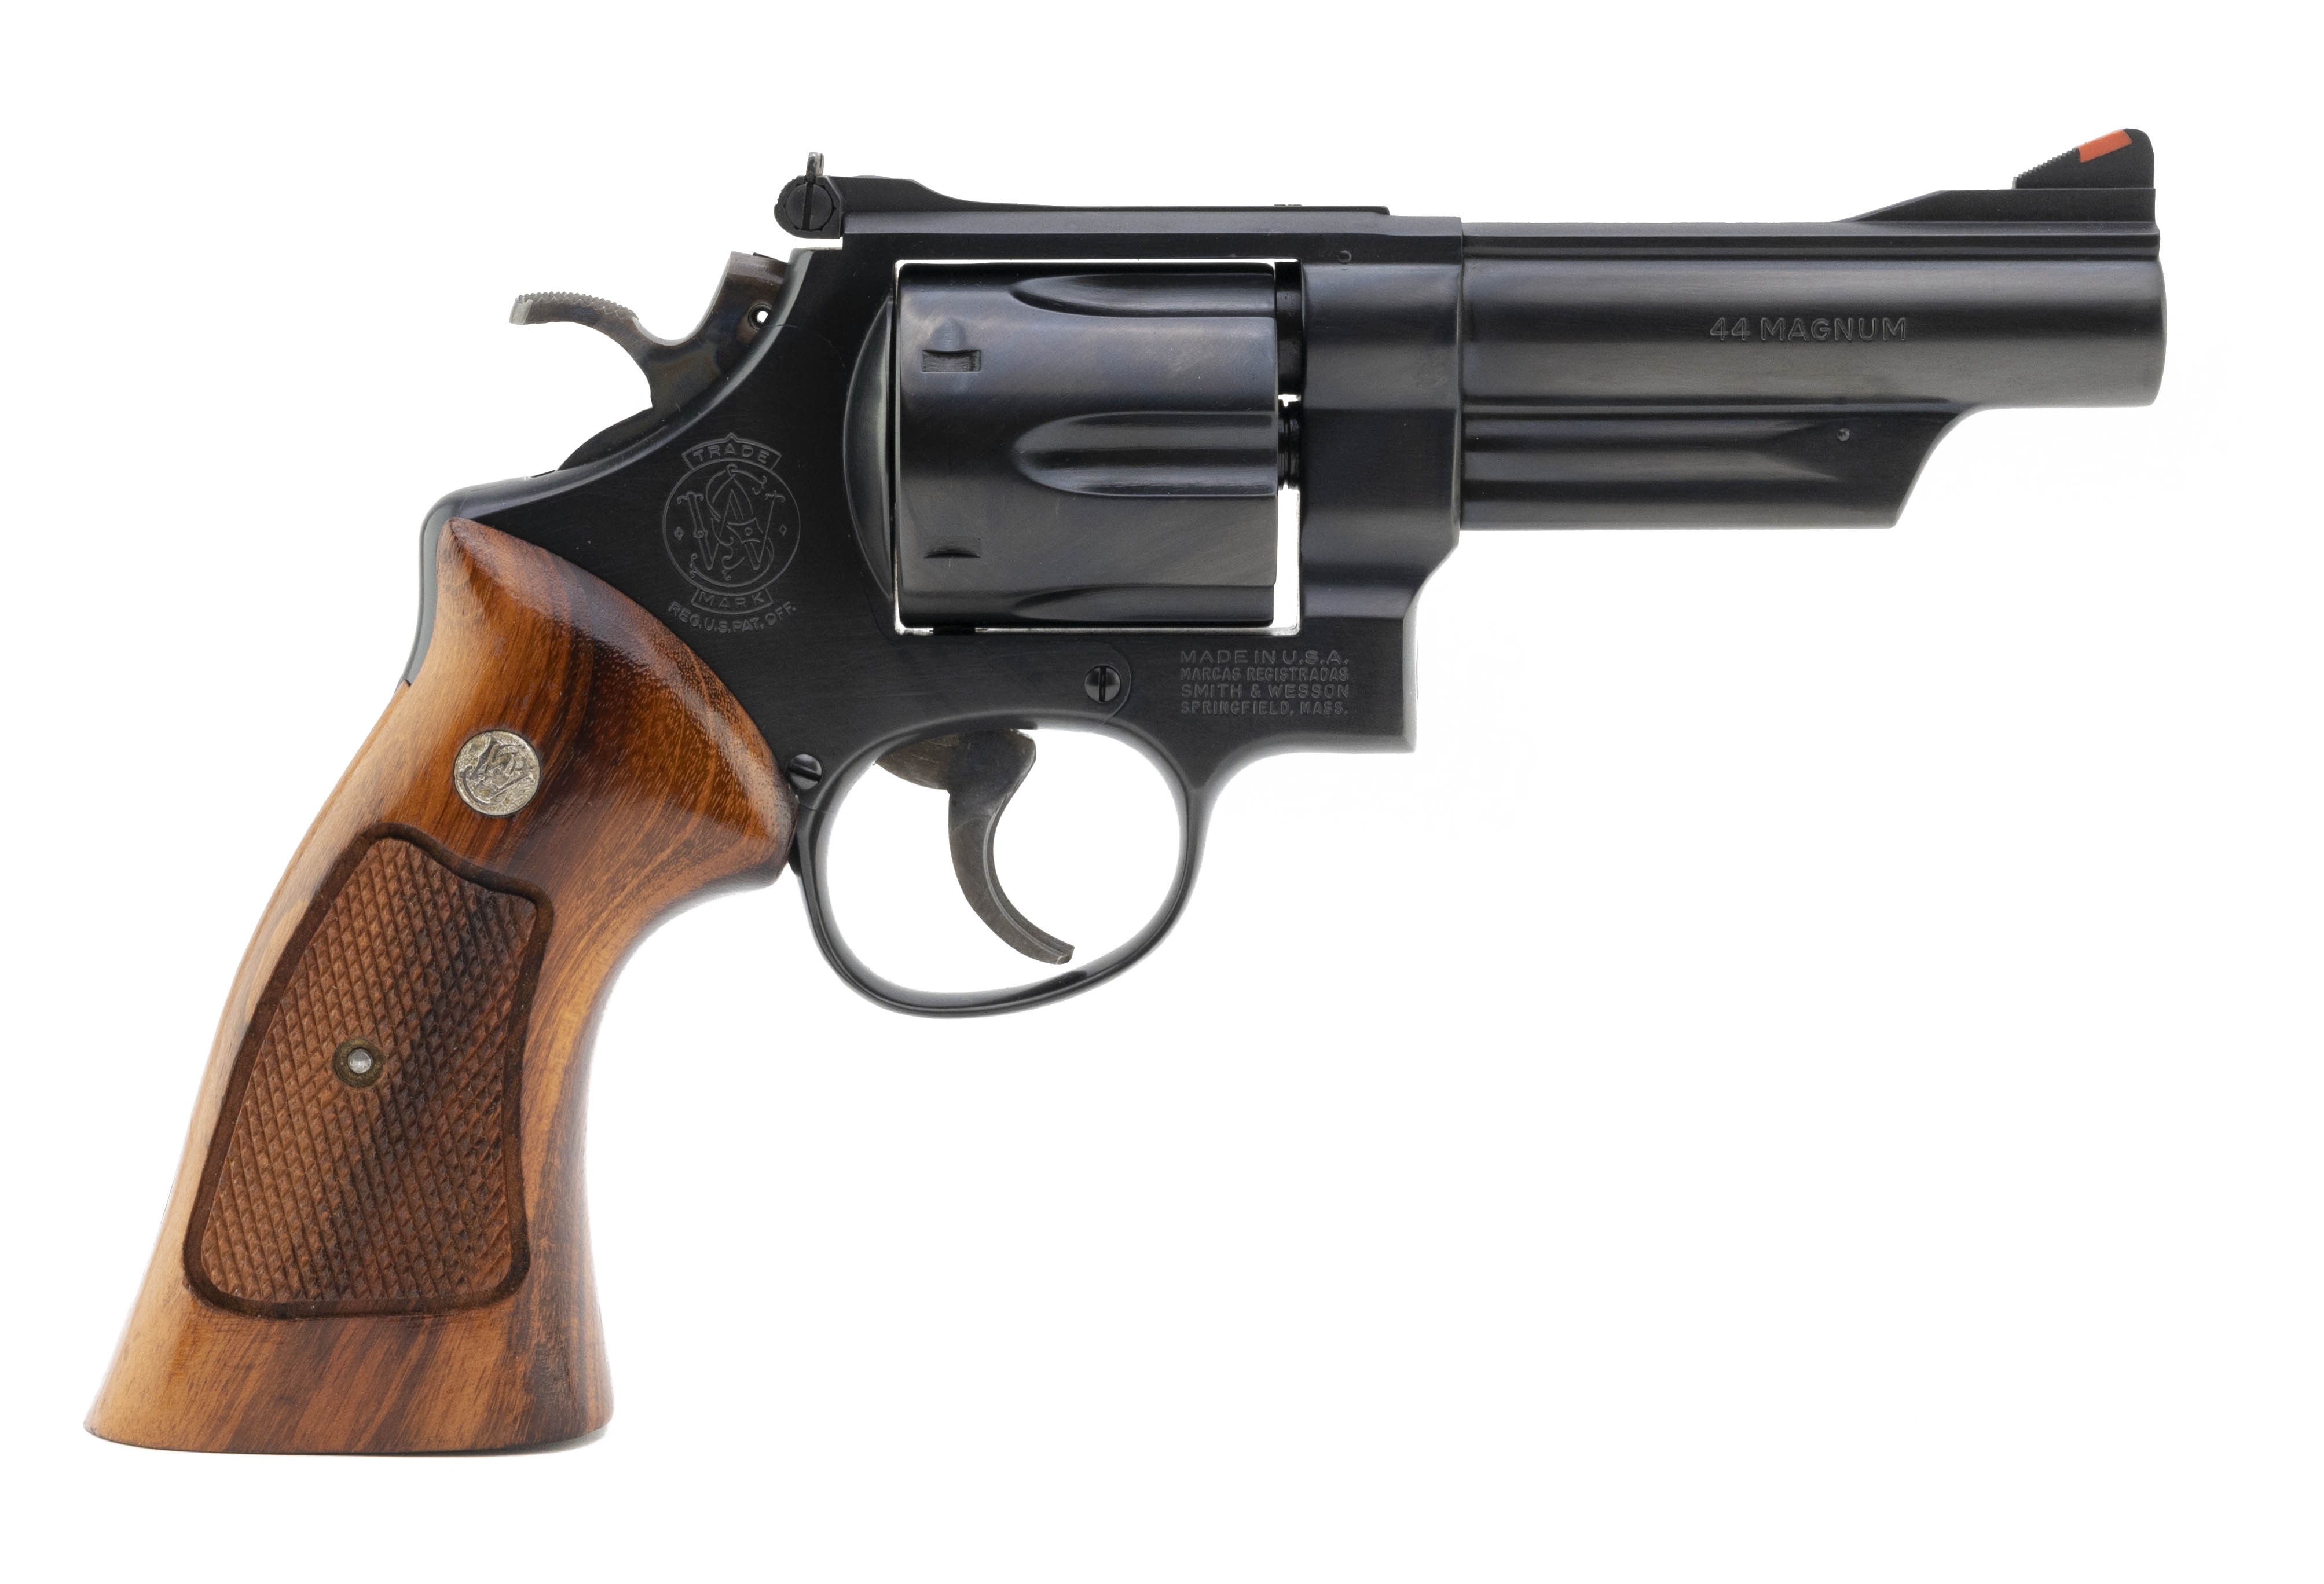 Smith & Wesson 29-2 .44 Magnum caliber revolver for sale.